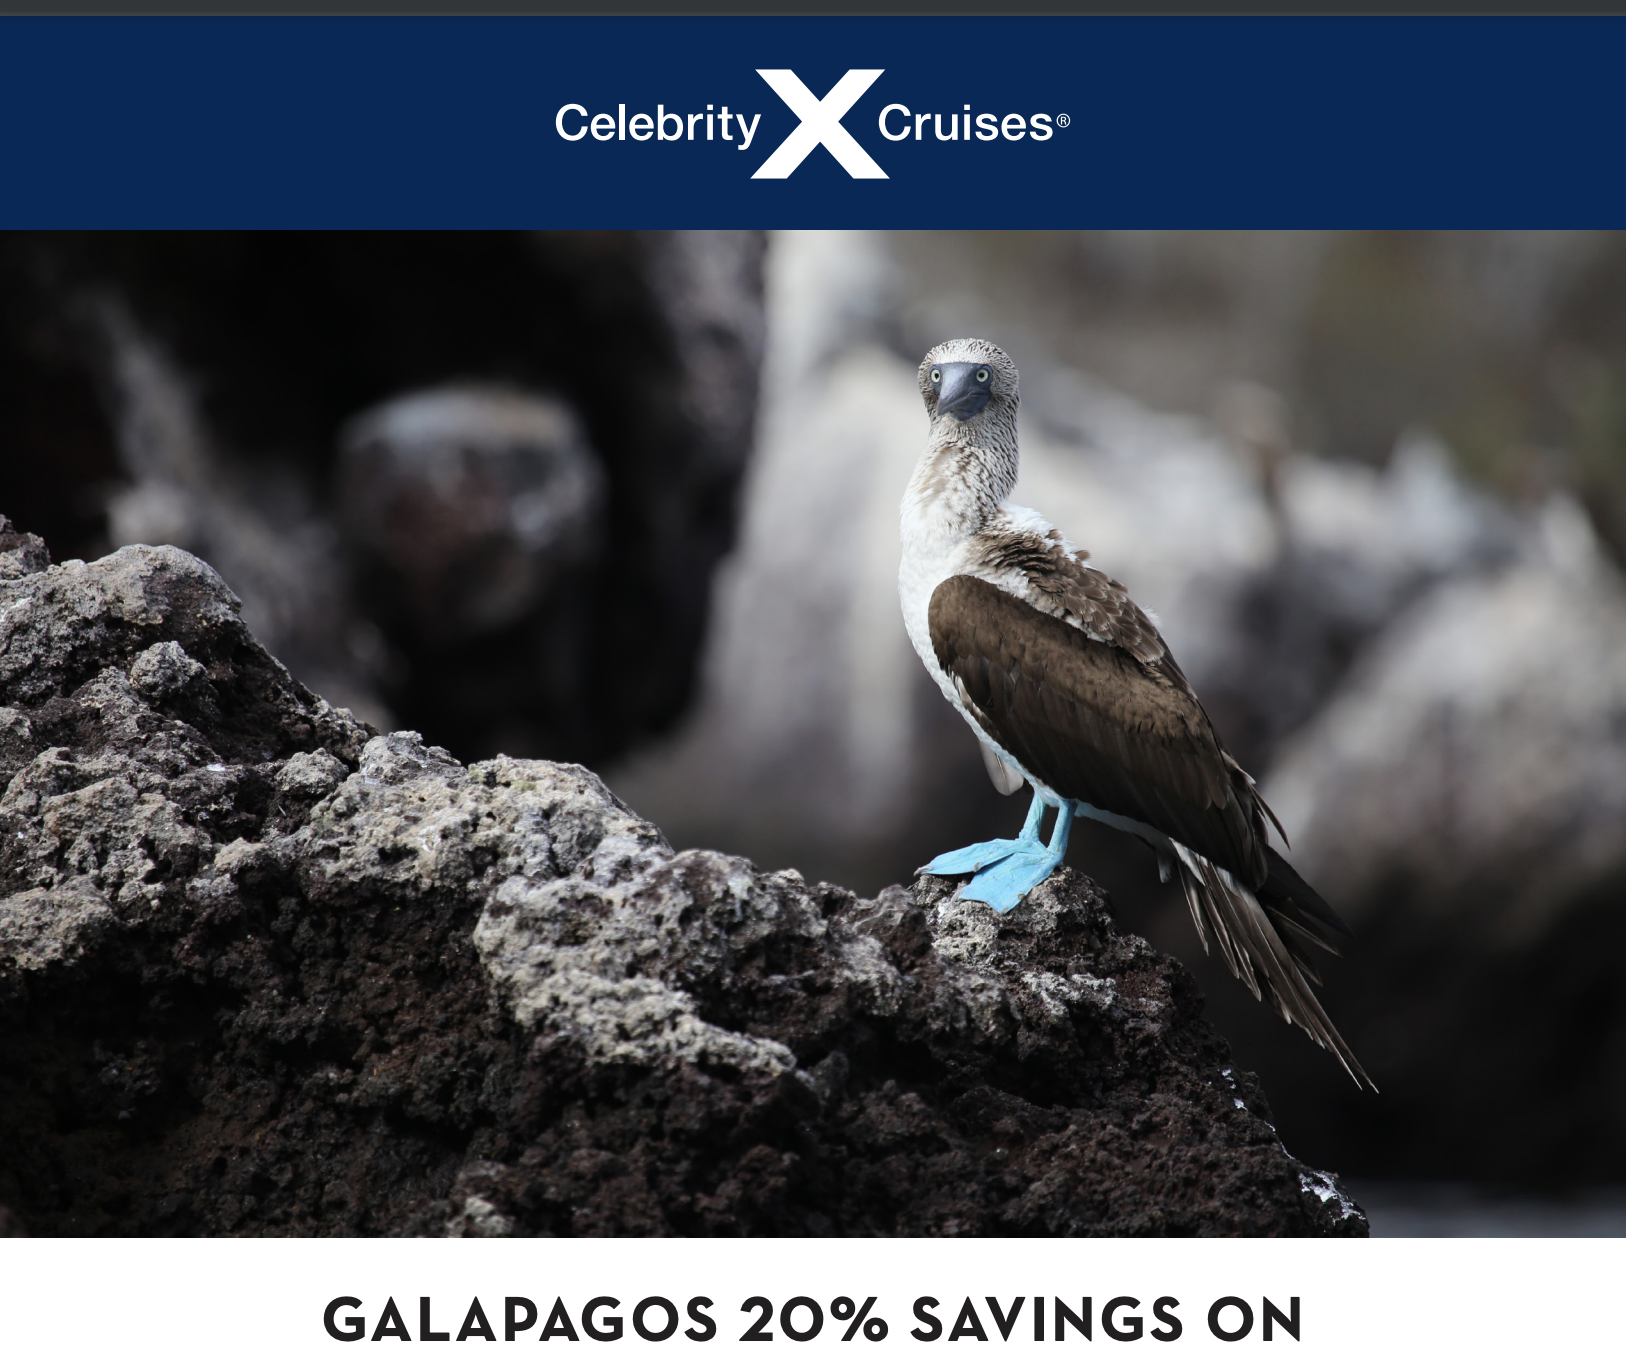 Galapagos 20% savings